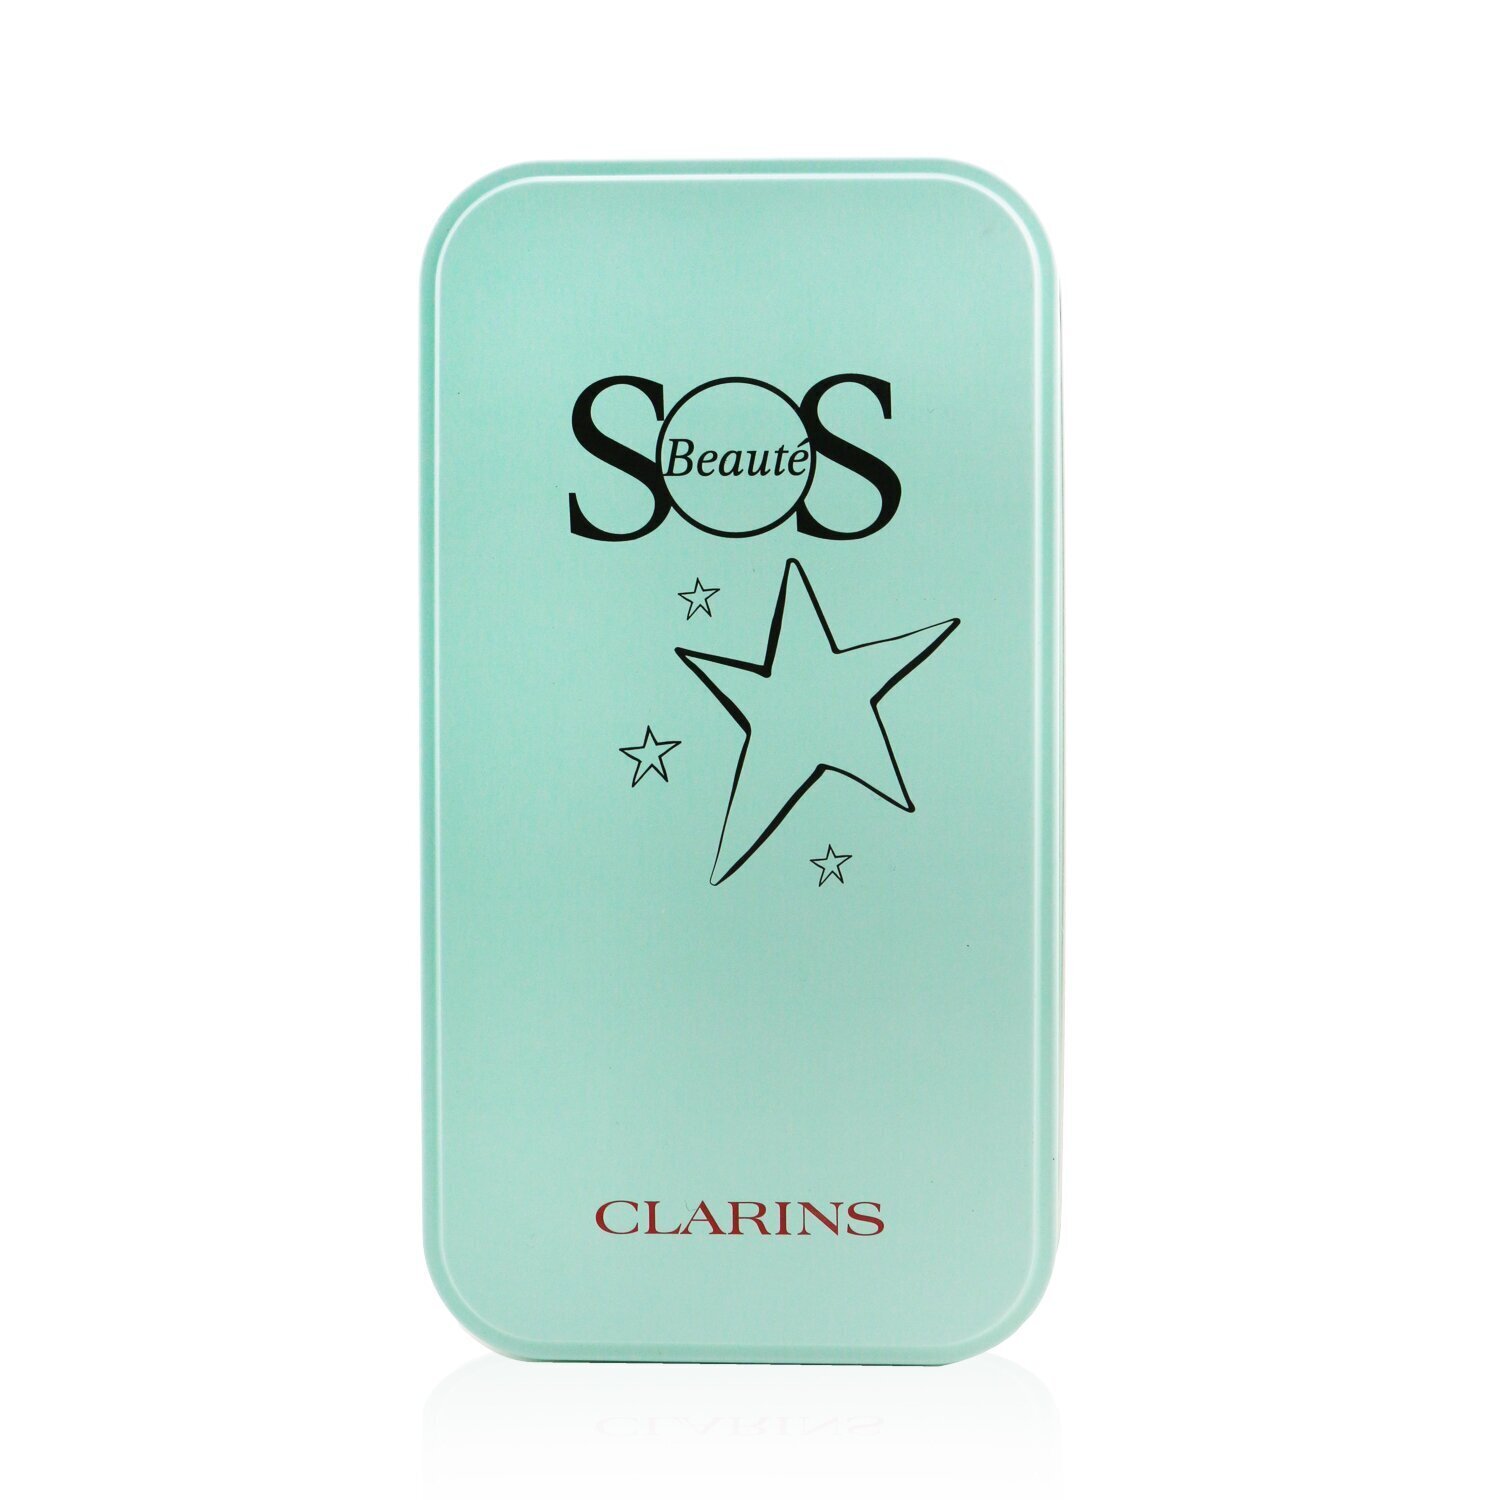 Clarins SOS Beaute Set (1x Primer 30ml + 1x Mask 15ml + 1x Lip Balm 3ml) 3pcs